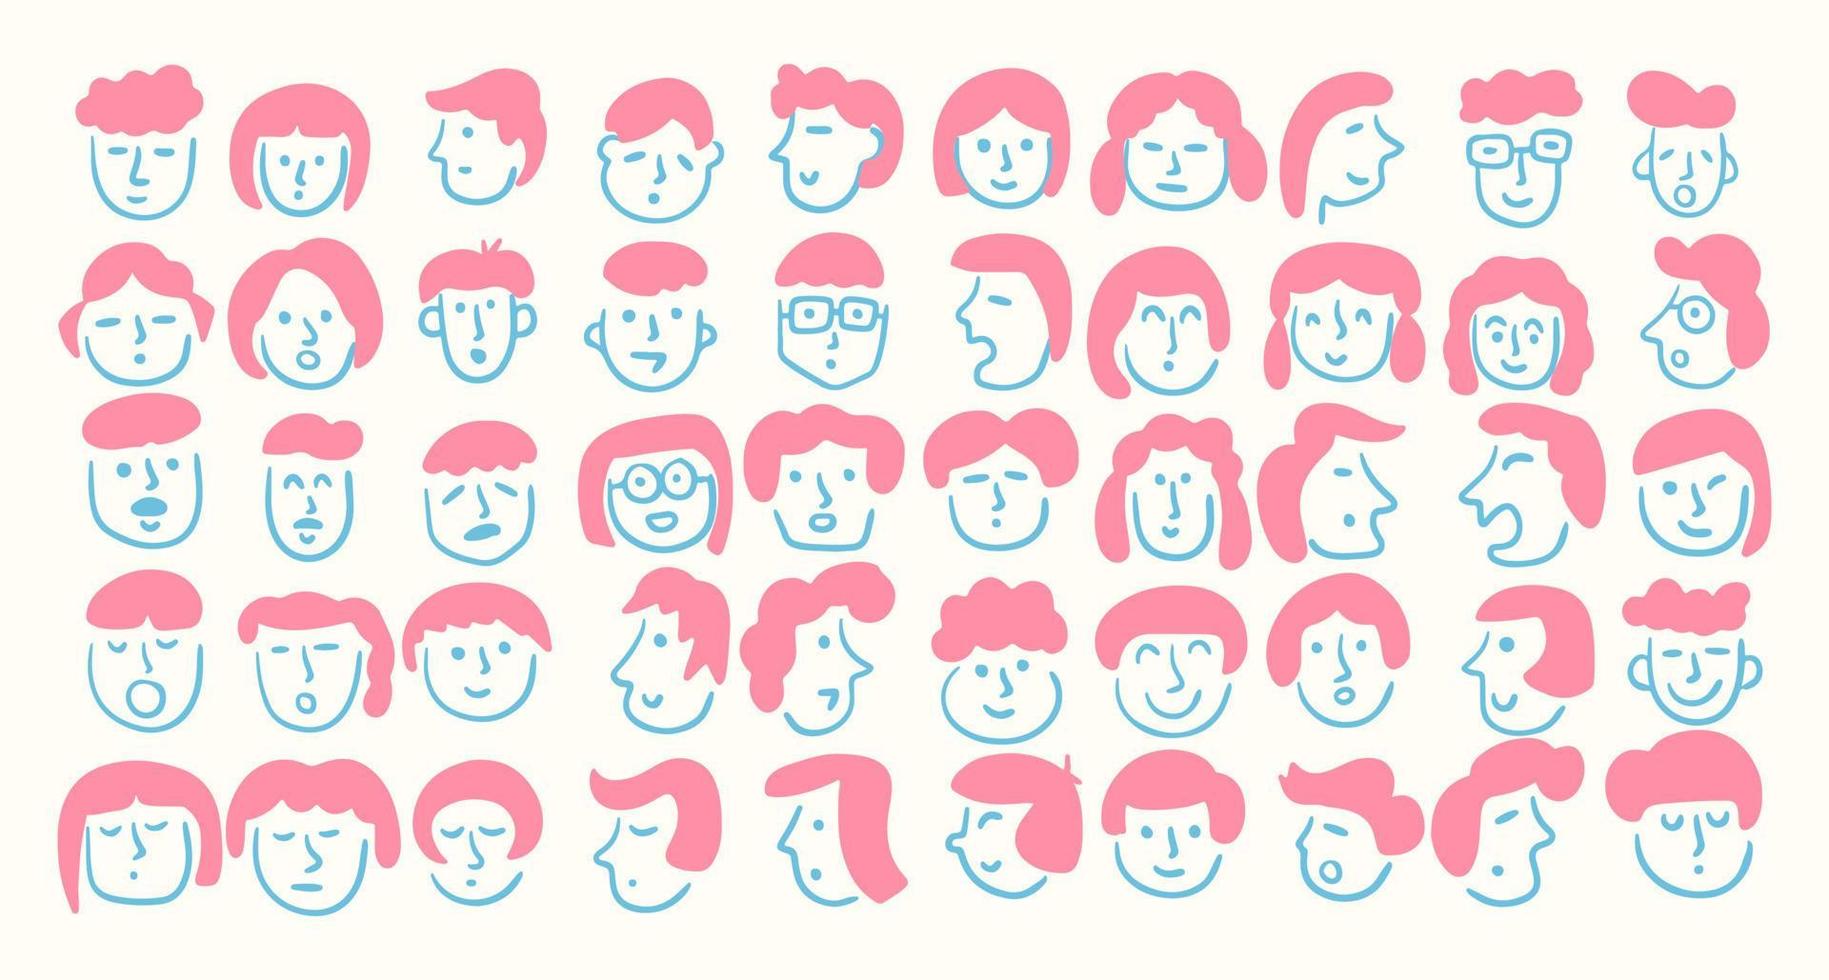 emoji de gente humana de garabatos dibujados a mano. colección de vectores de moda moderna